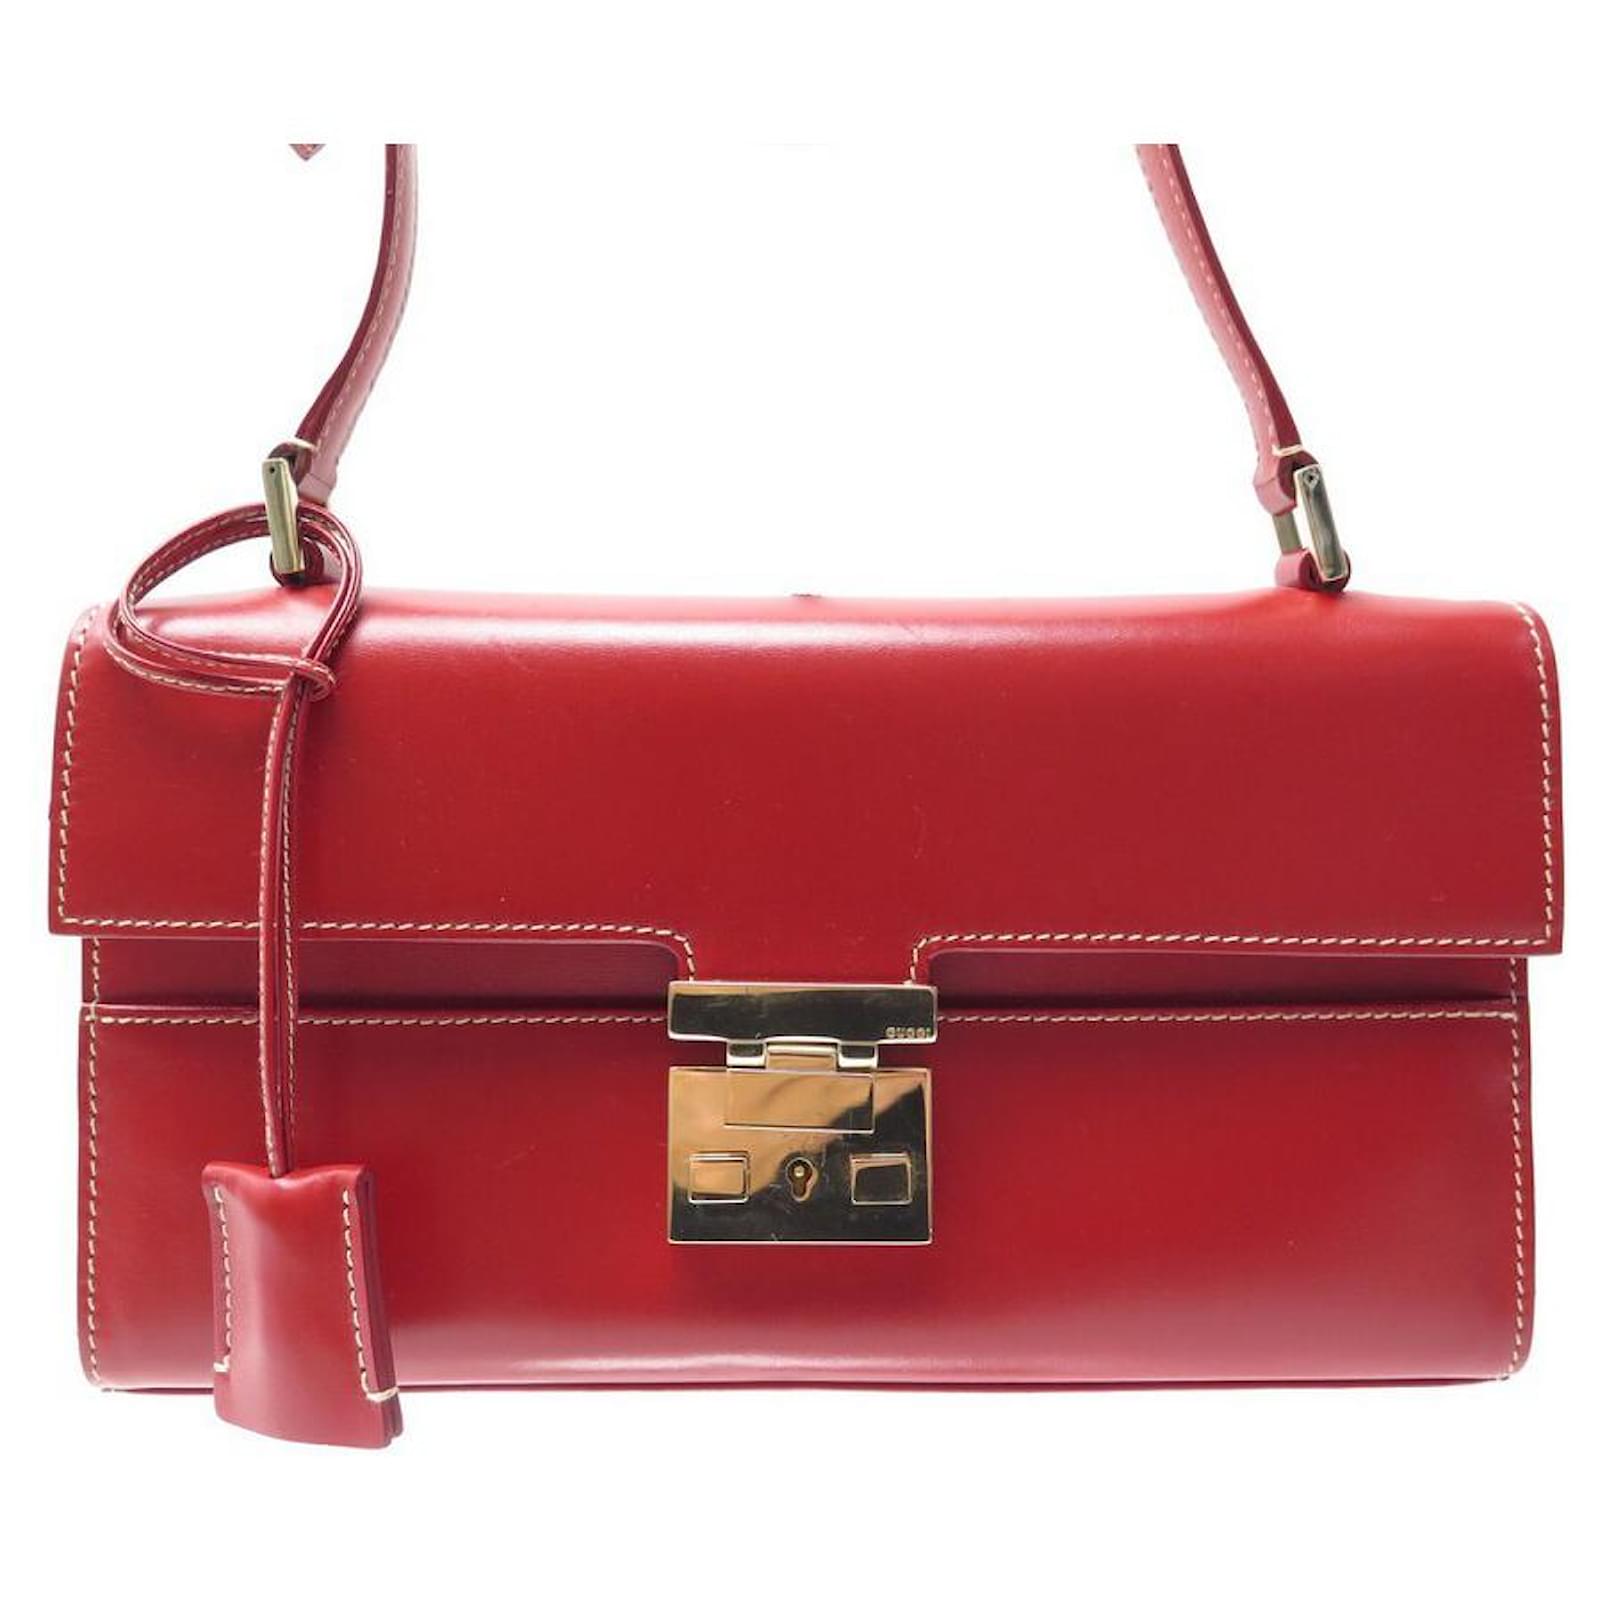 Gucci Baguette Handbags